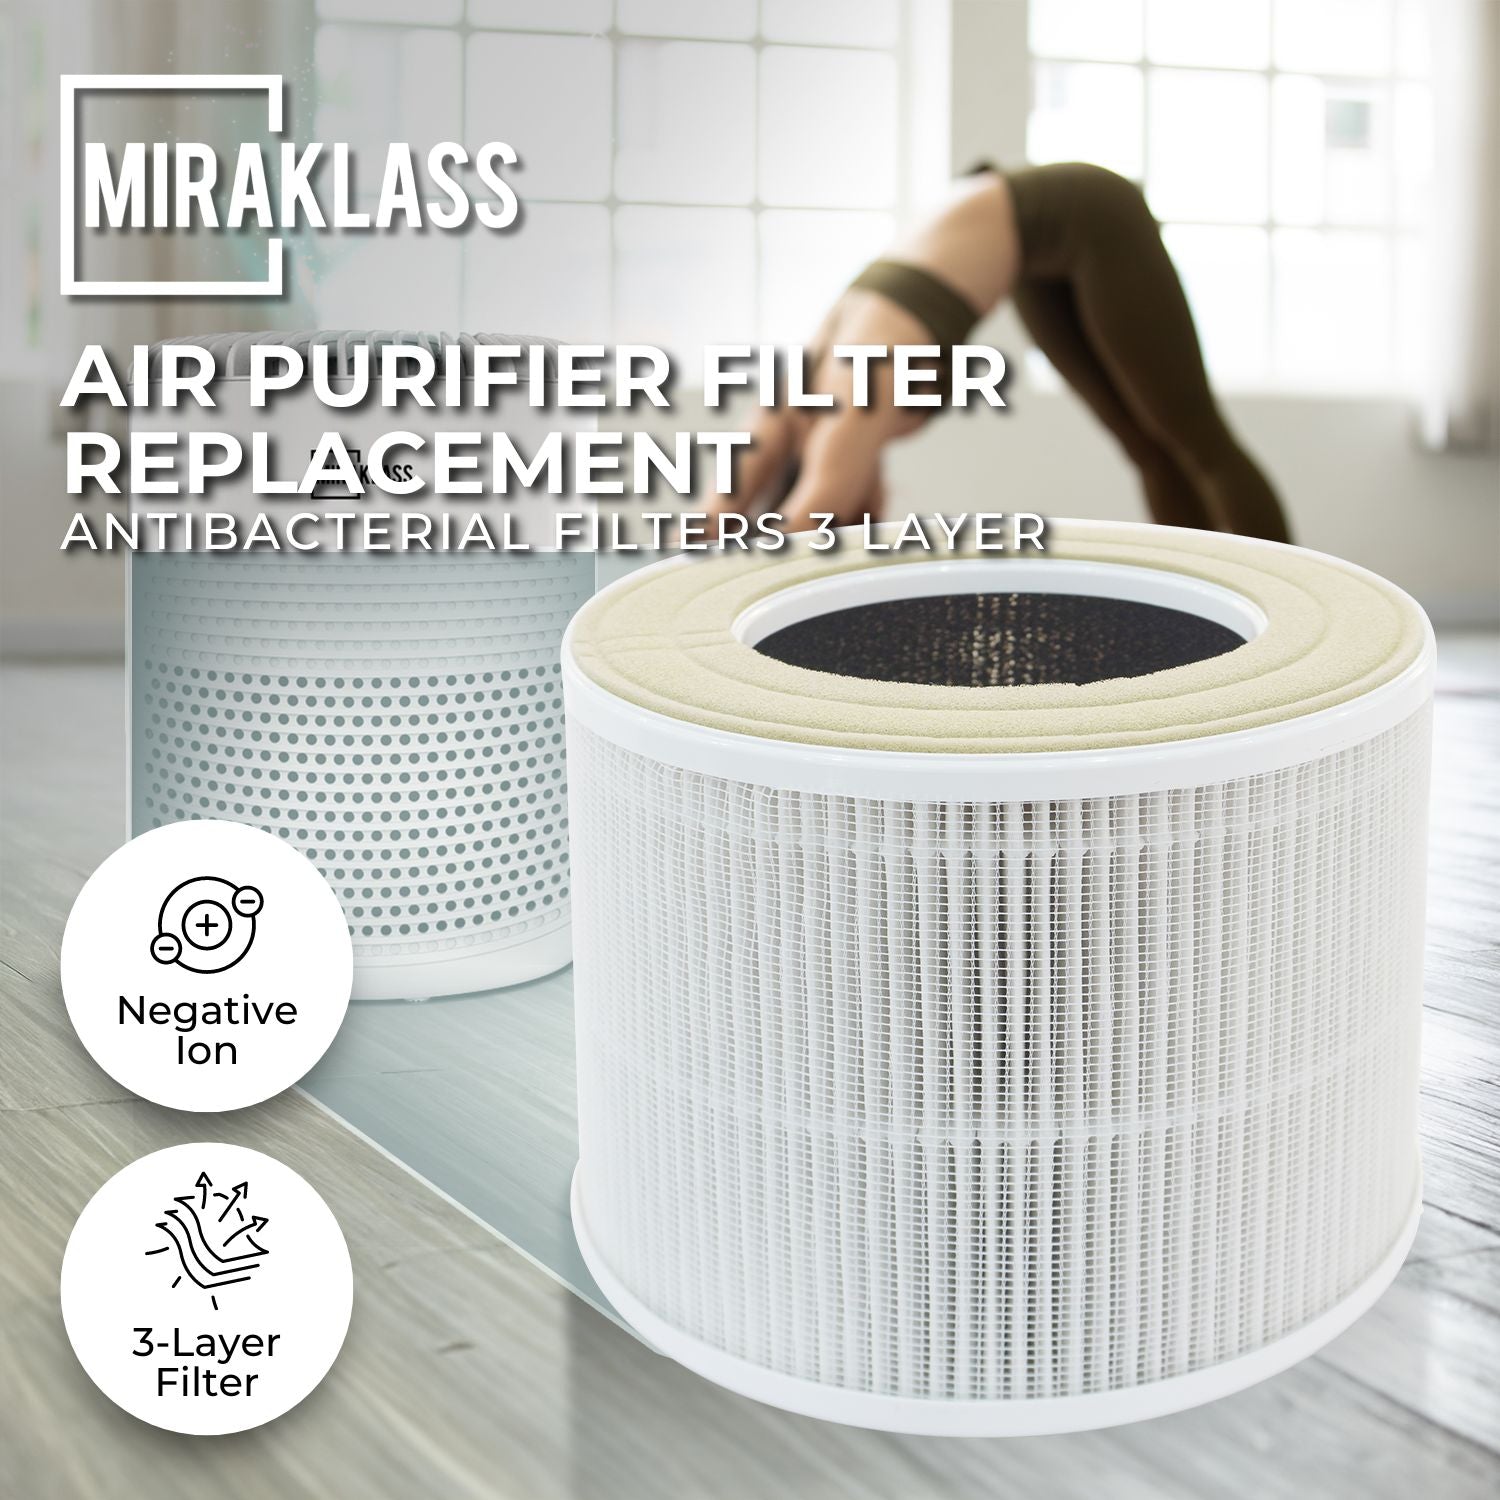 MIRAKLASS Air Purifier Filter For MK-KJ050C7-AWK